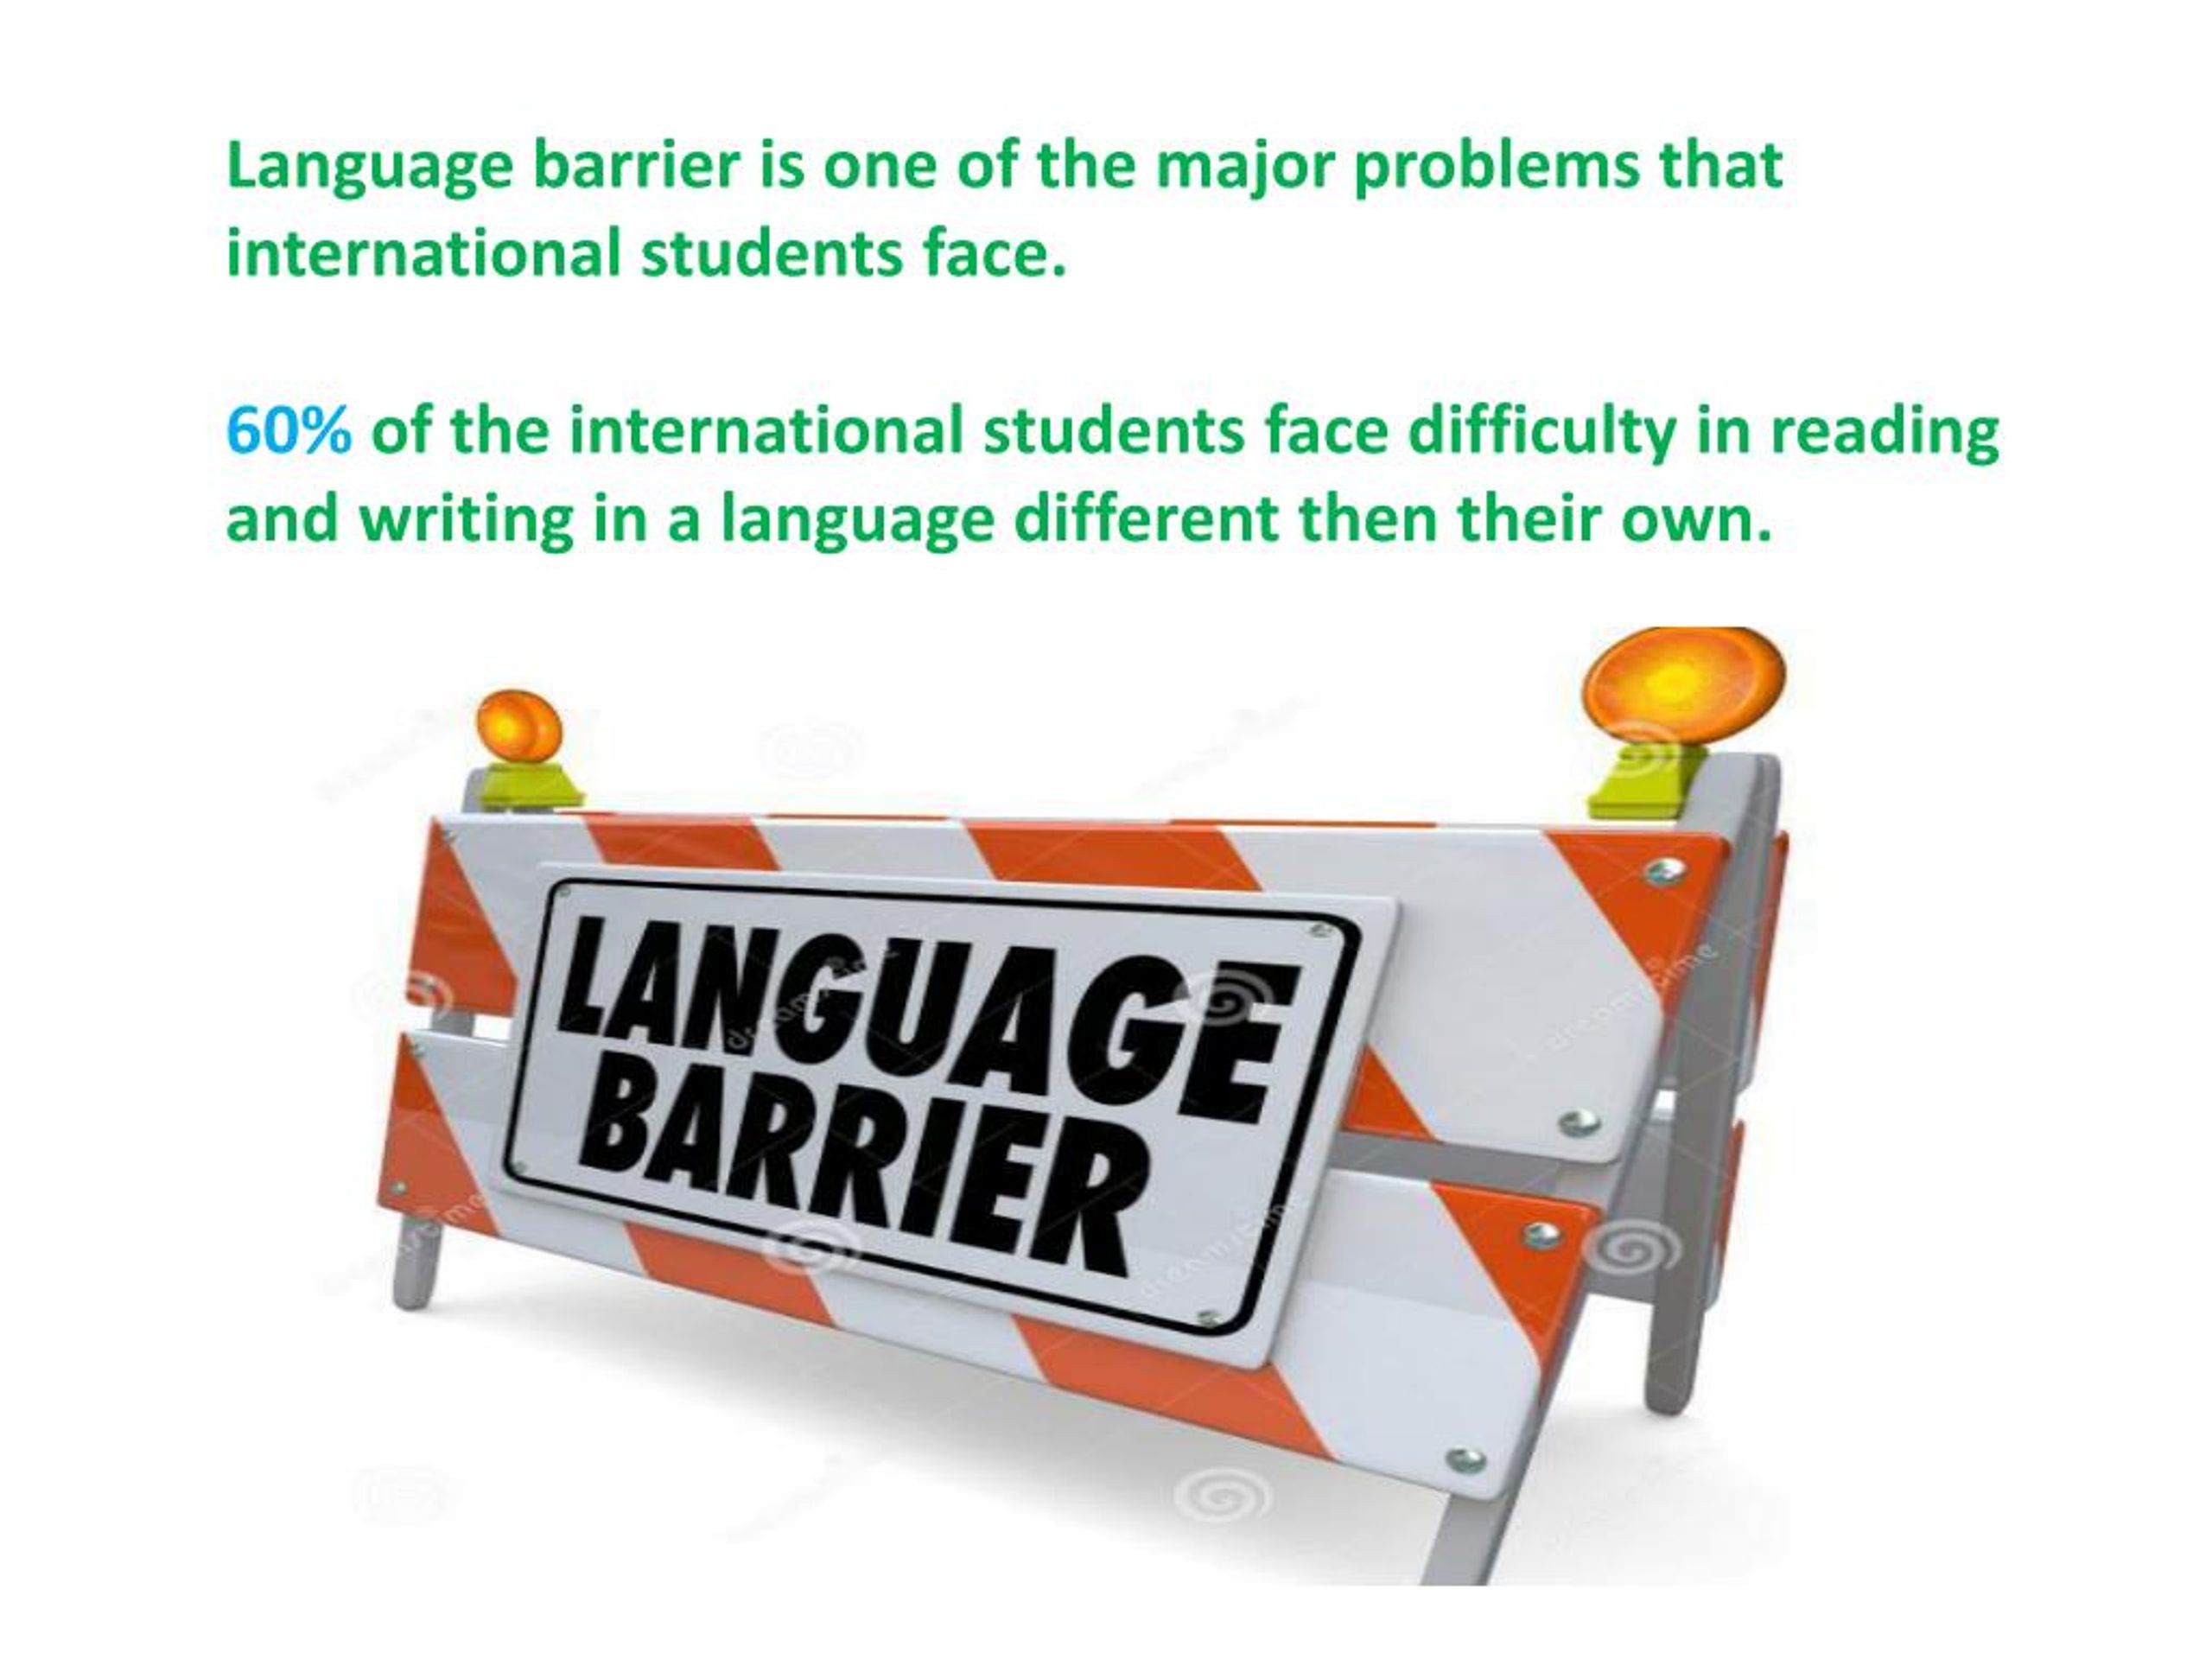 language barriers powerpoint presentation